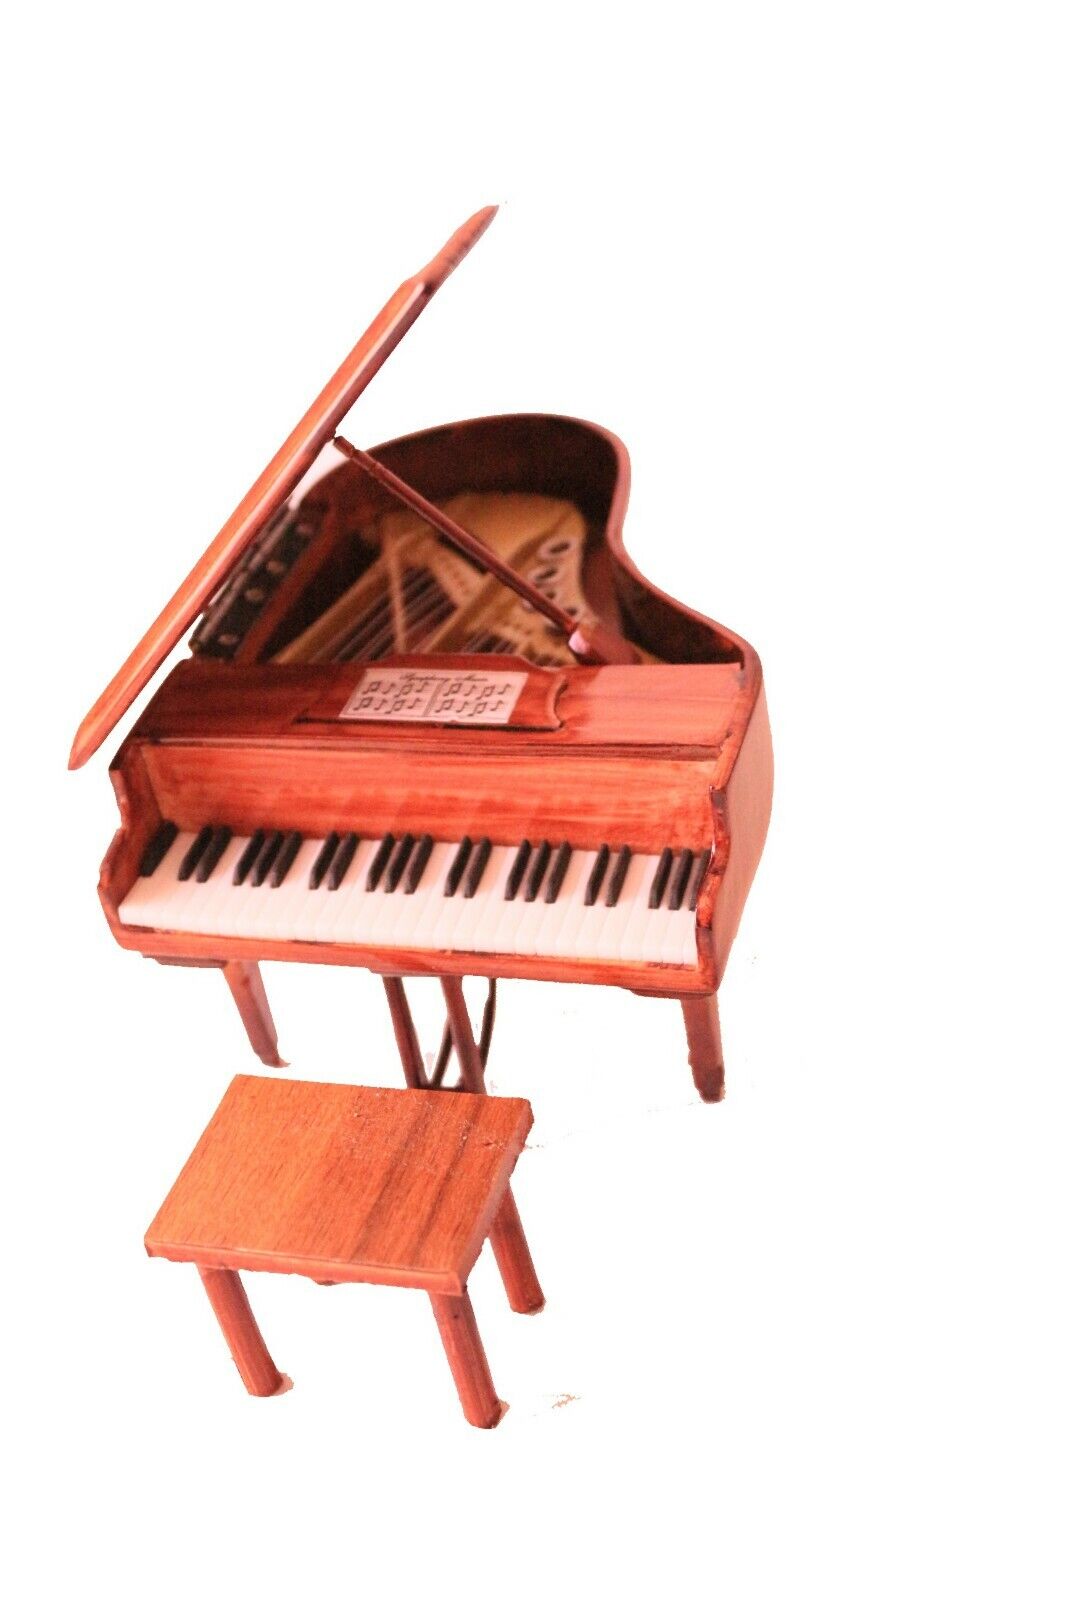 Hand made Wooden Miniature Brown Piano Replica